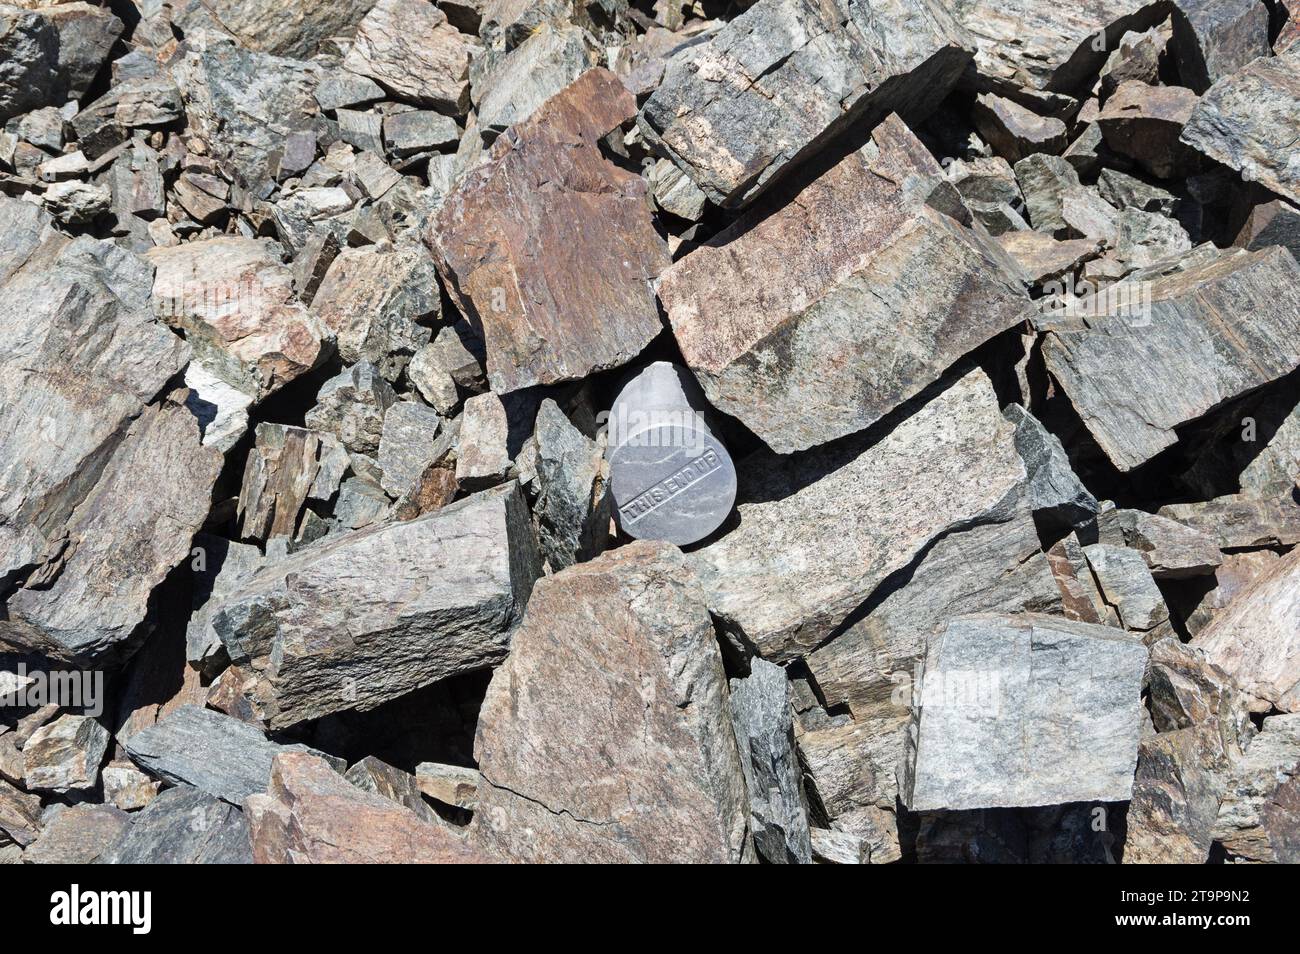 aluminum summit register on 13282 foot Mount McDuffie in the Sierra Nevada mountains of California Stock Photo